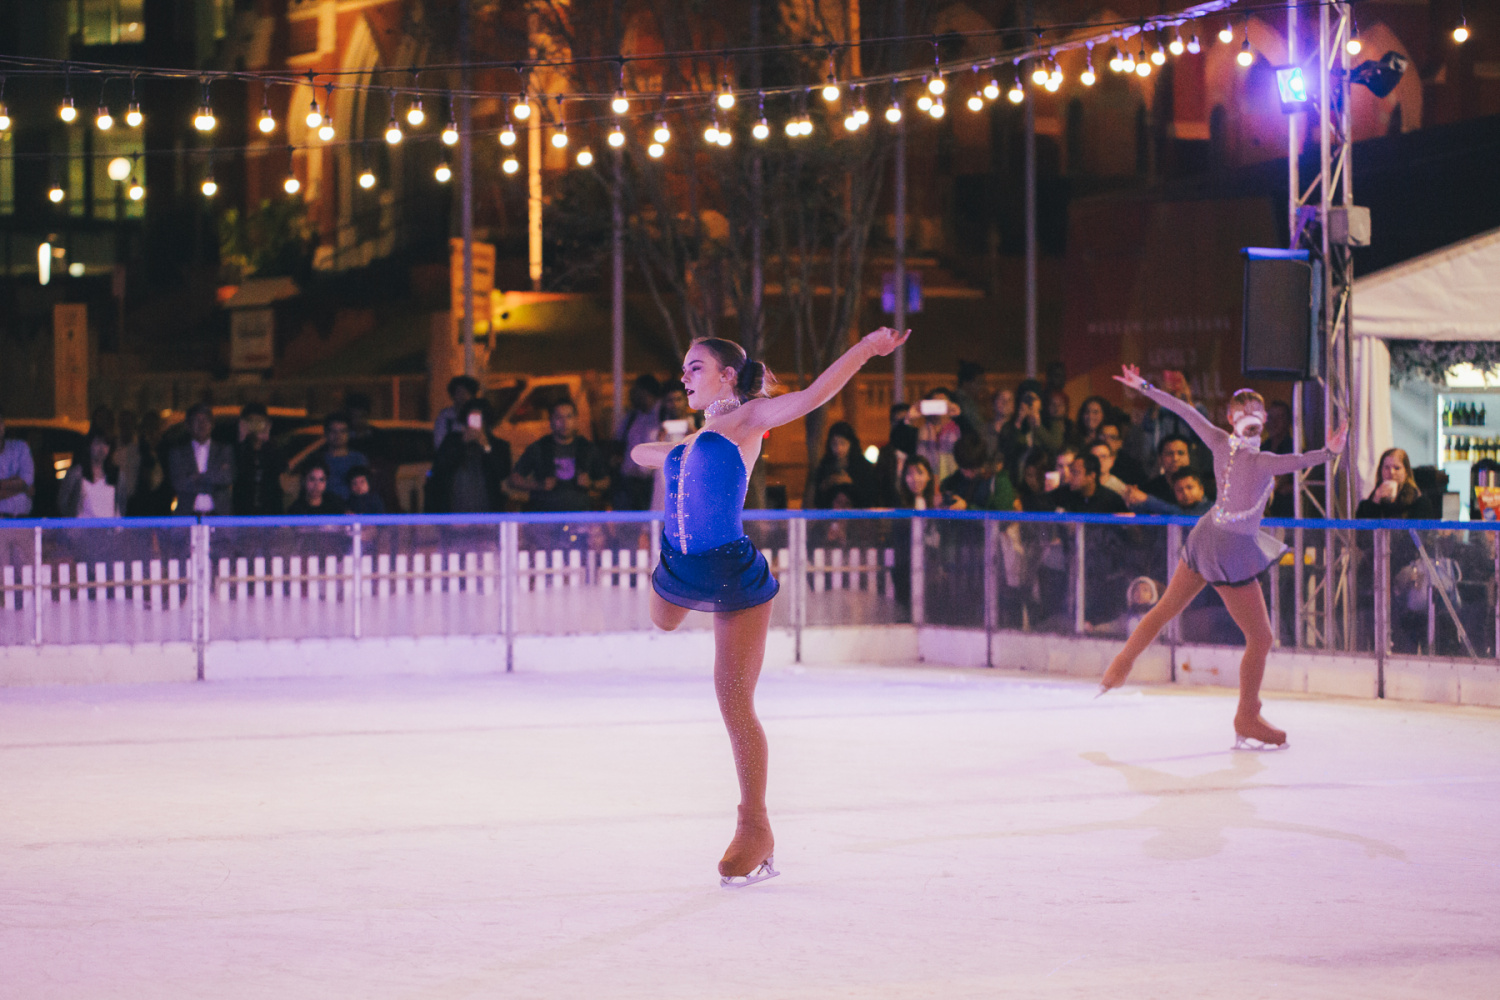 Skating At Festival brings snow, skates and après ski vibes to King